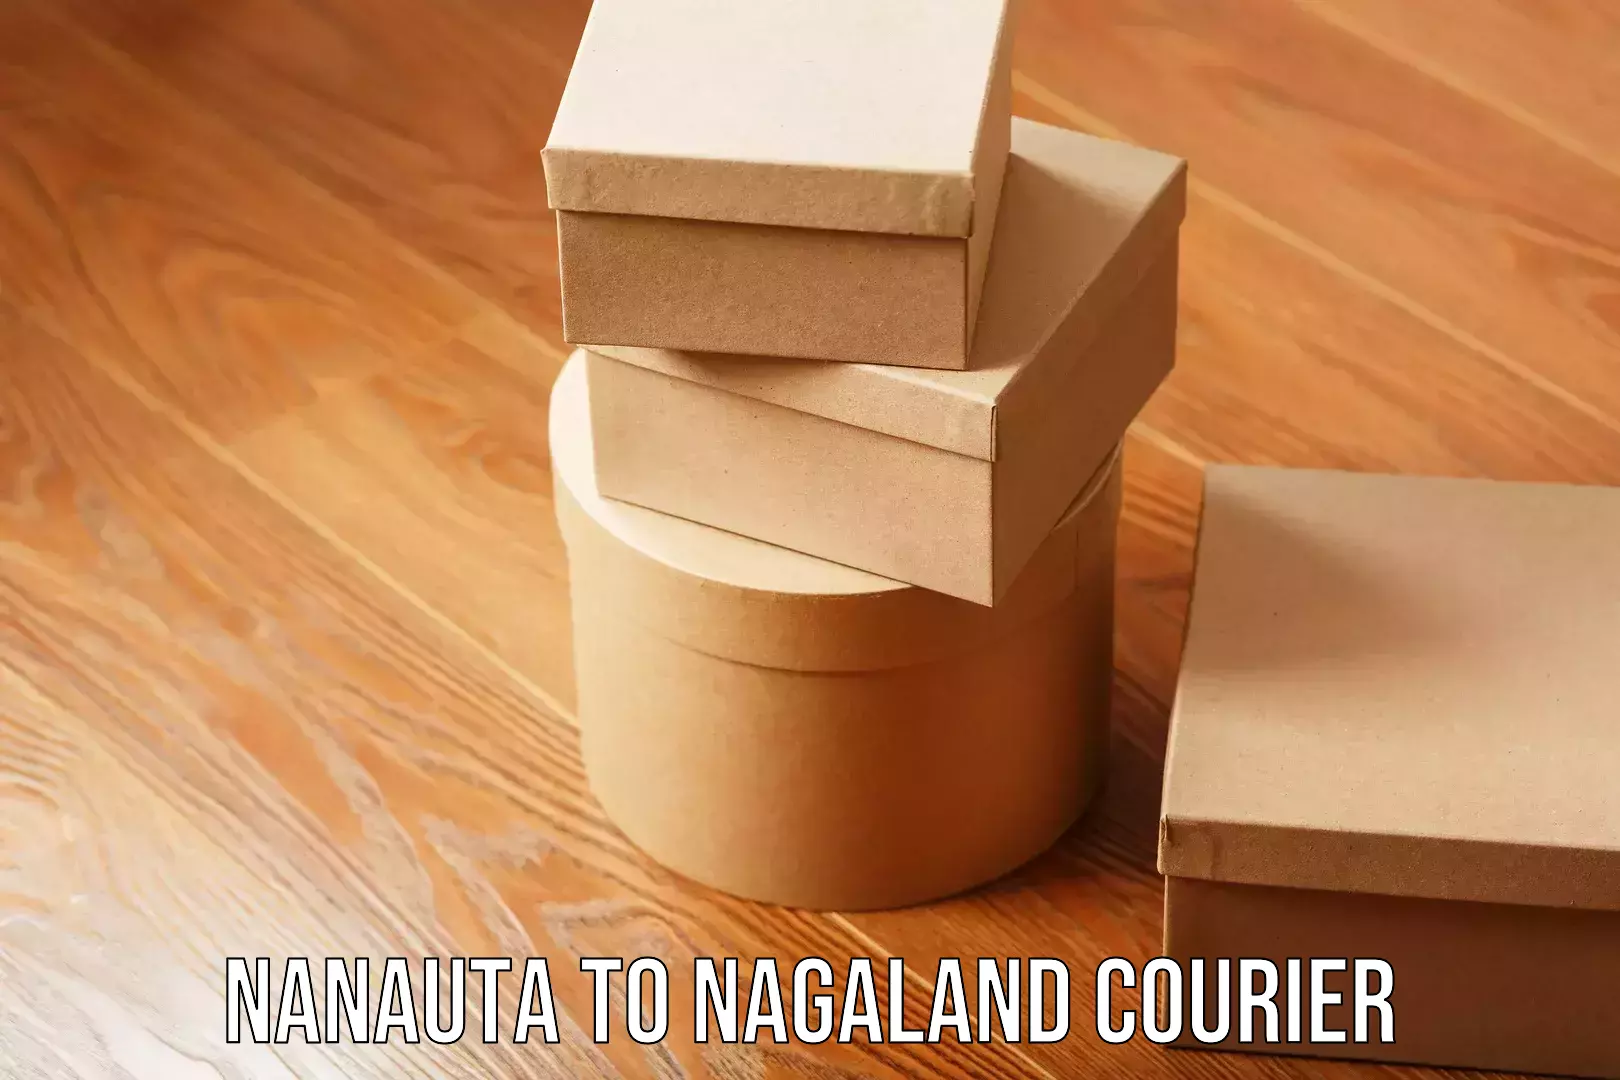 Household moving experts Nanauta to Nagaland